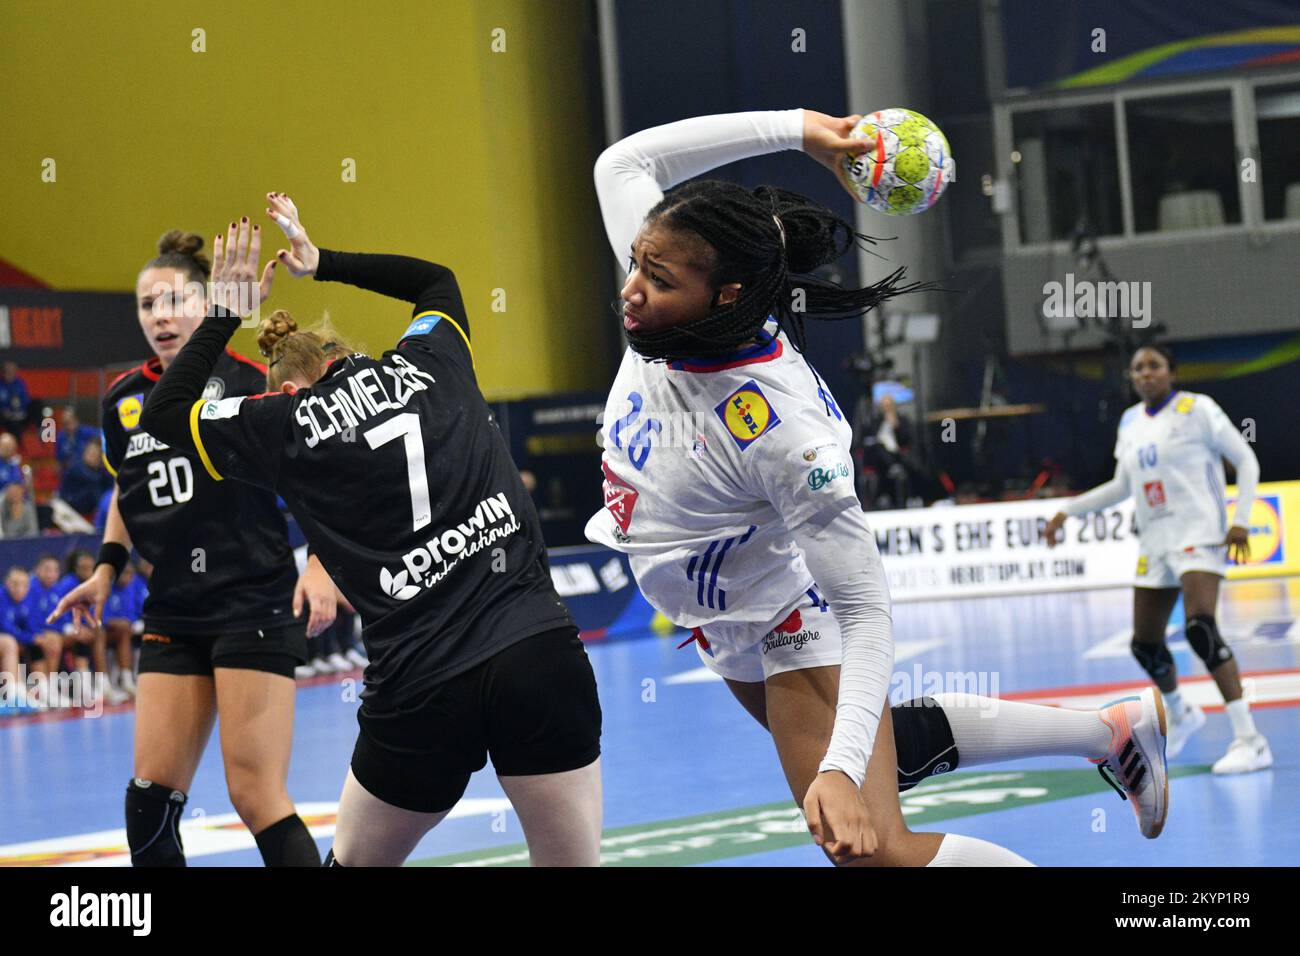 Women's handball European Championship 2022 Main Group match between France and Germany Stock Photo